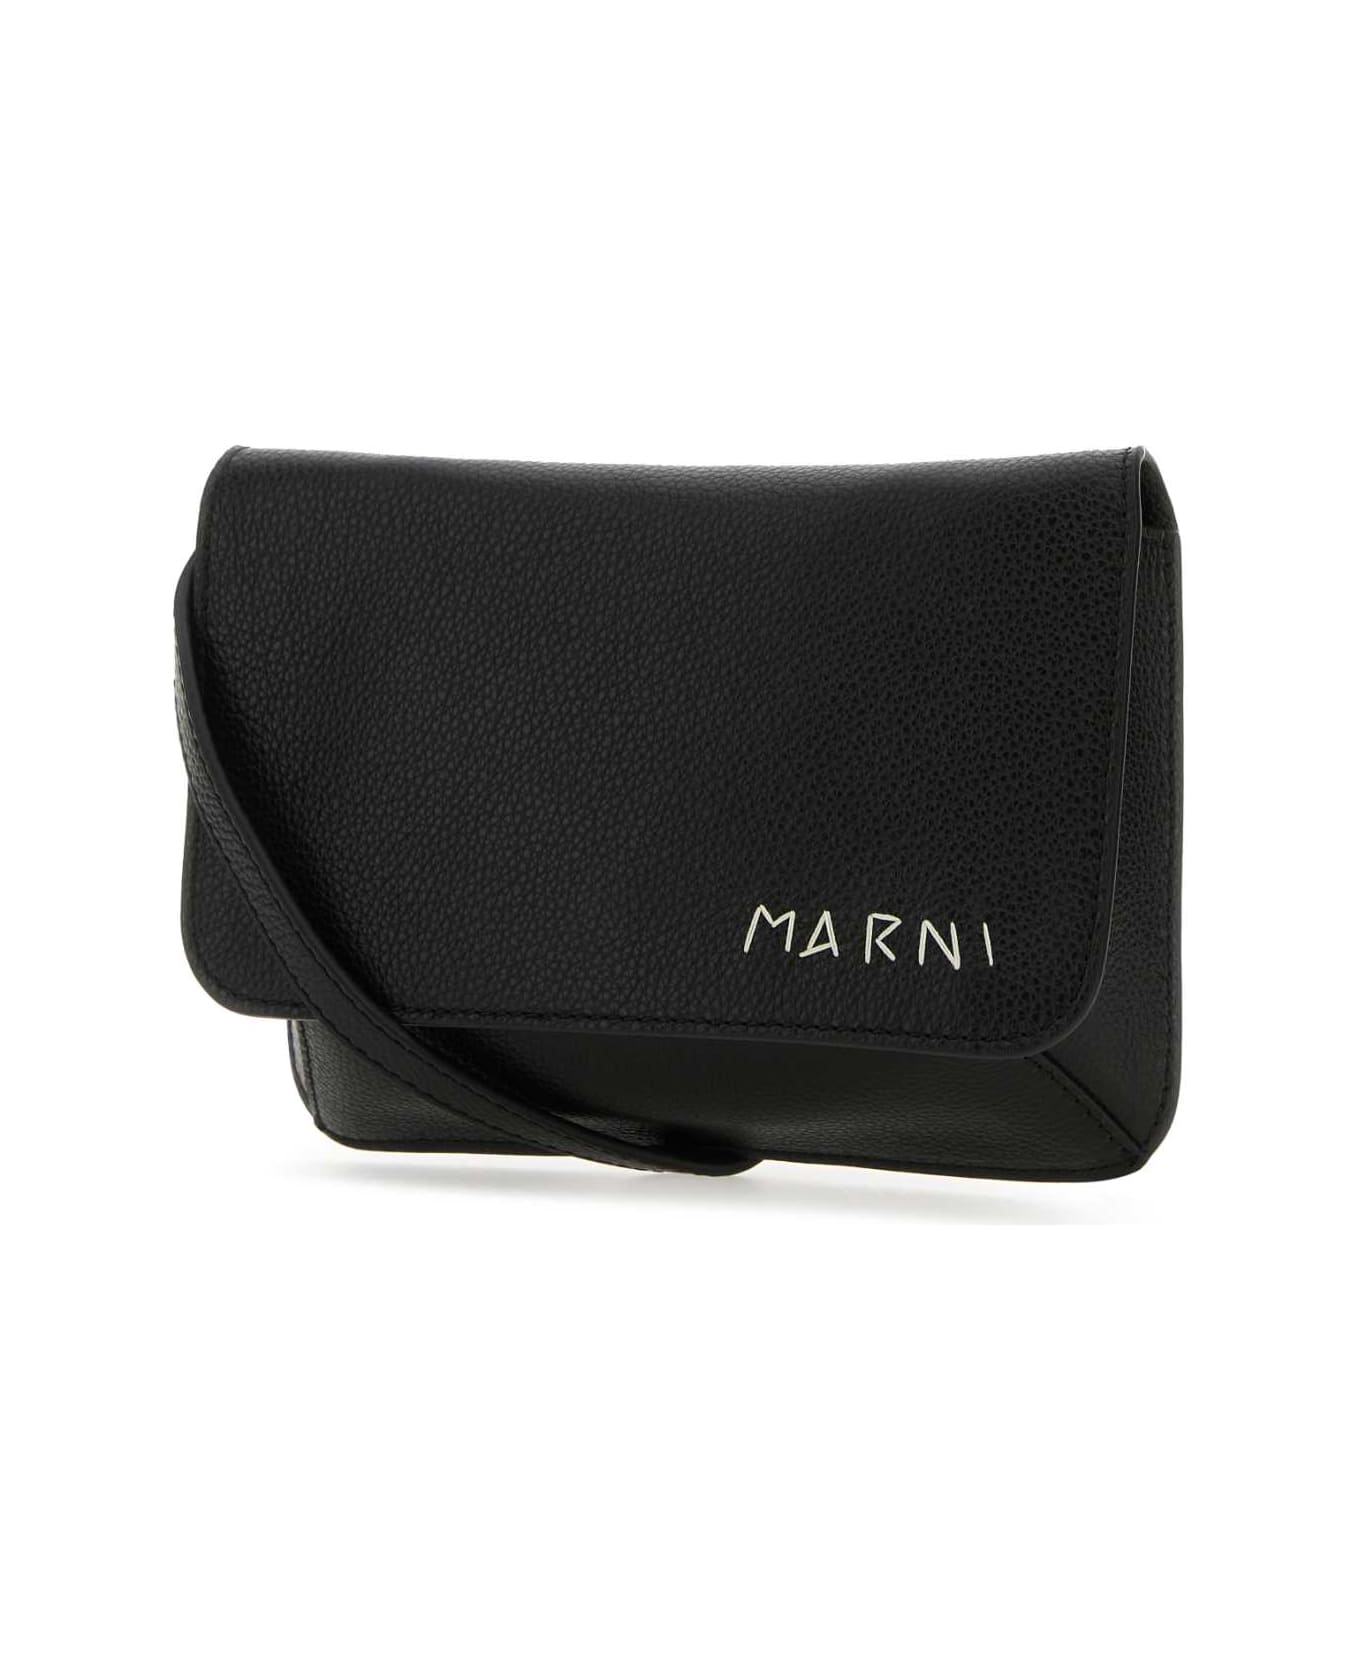 Marni Black Leather Flap Trunk Crossbody Bag - BLACK